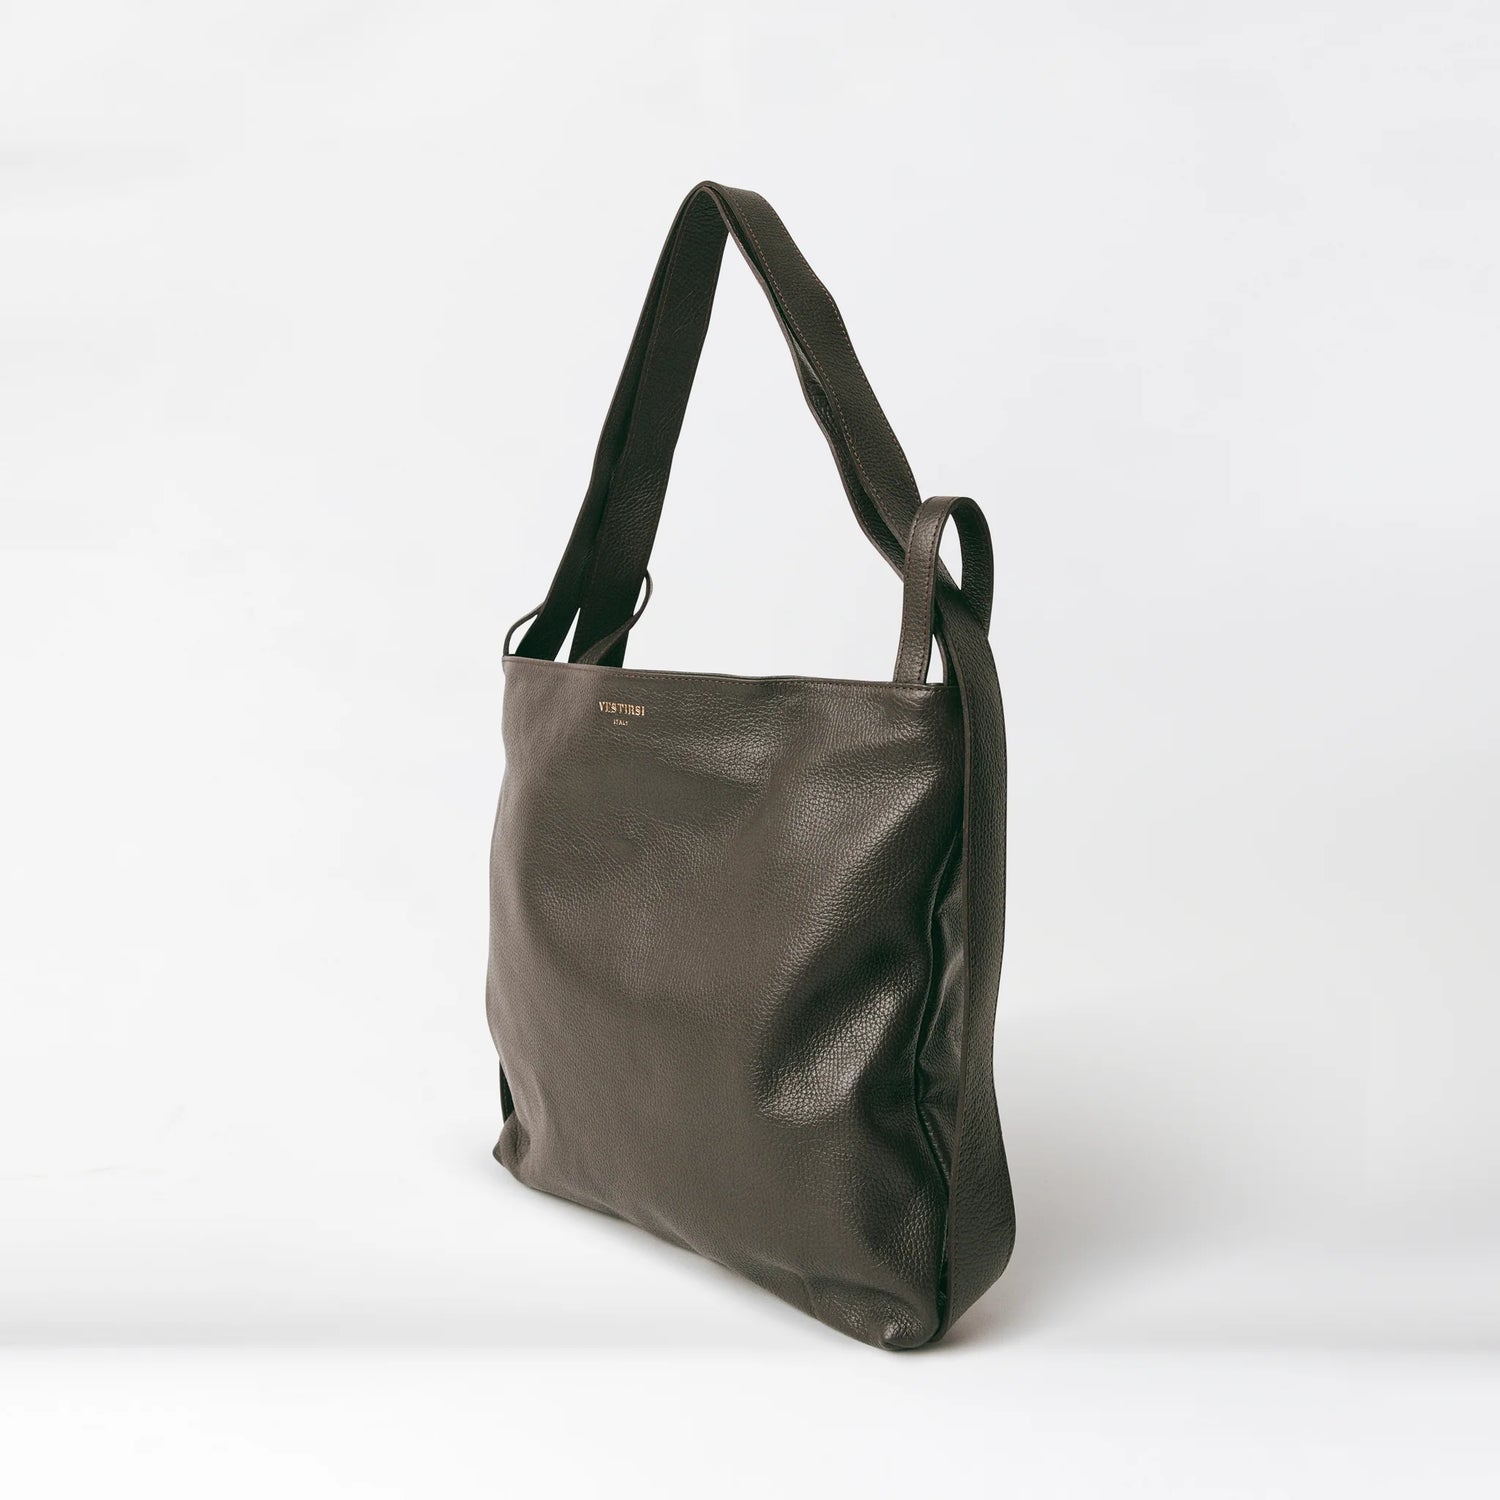 Bella 2-in-1 Convertible Backpack Tote - Dark Chocolate